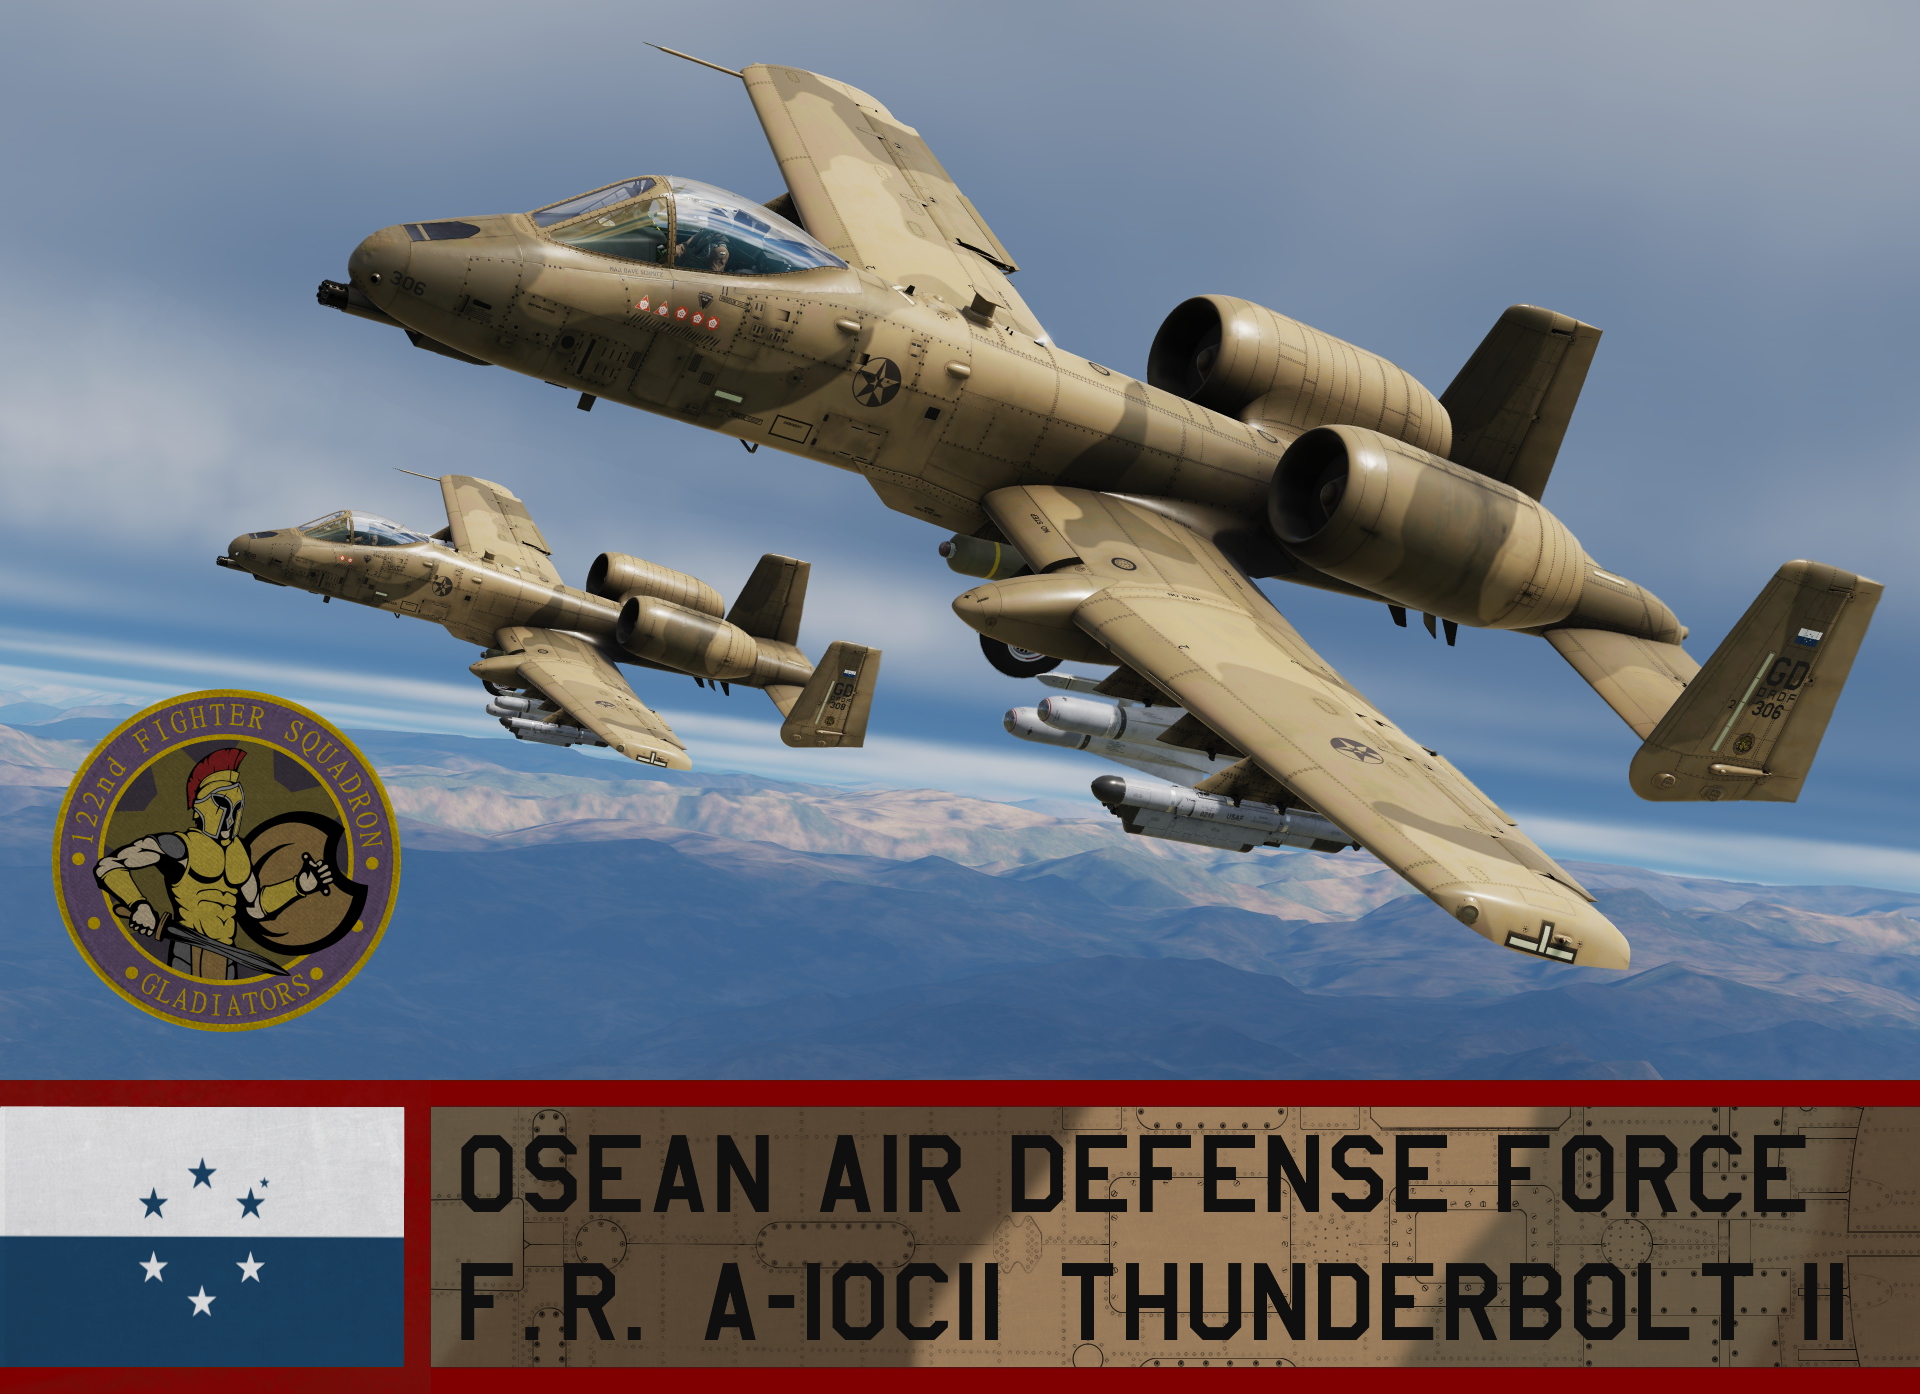 Osean Air Defense Force A-10CII - Ace Combat 7 (122nd TFS)